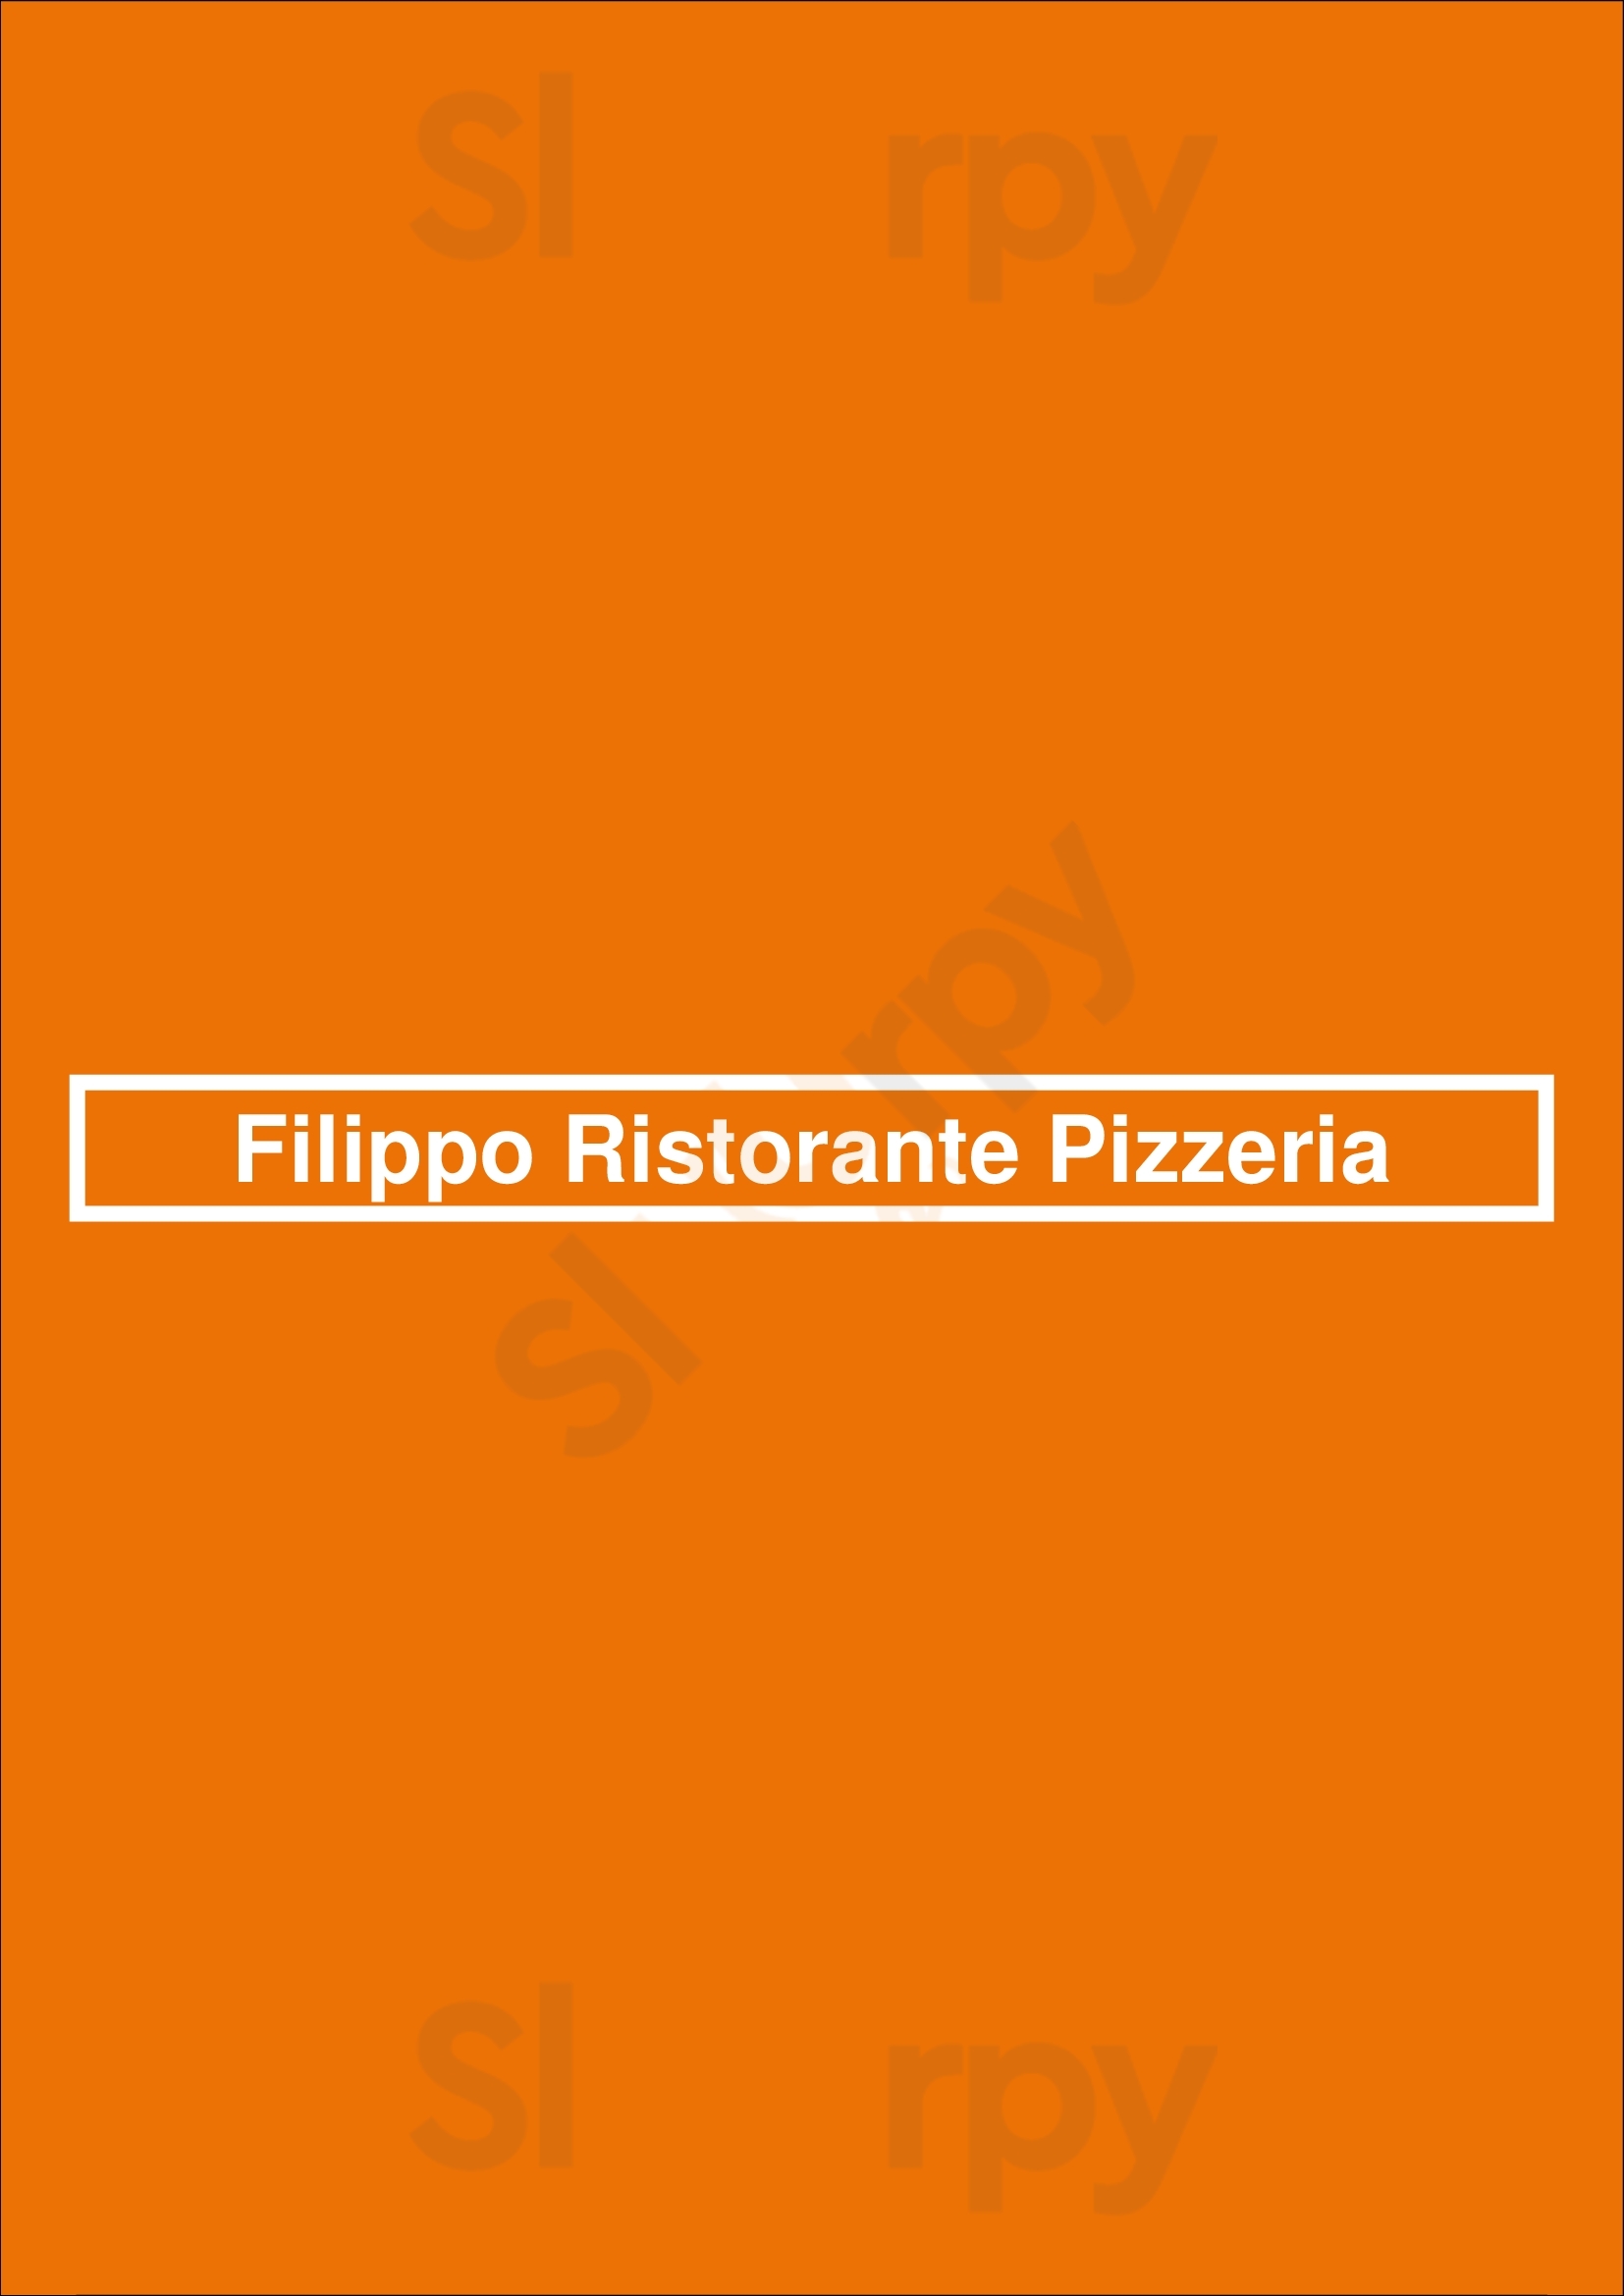 Filippo Pizzeria Trattoria Bad Wildbad Menu - 1